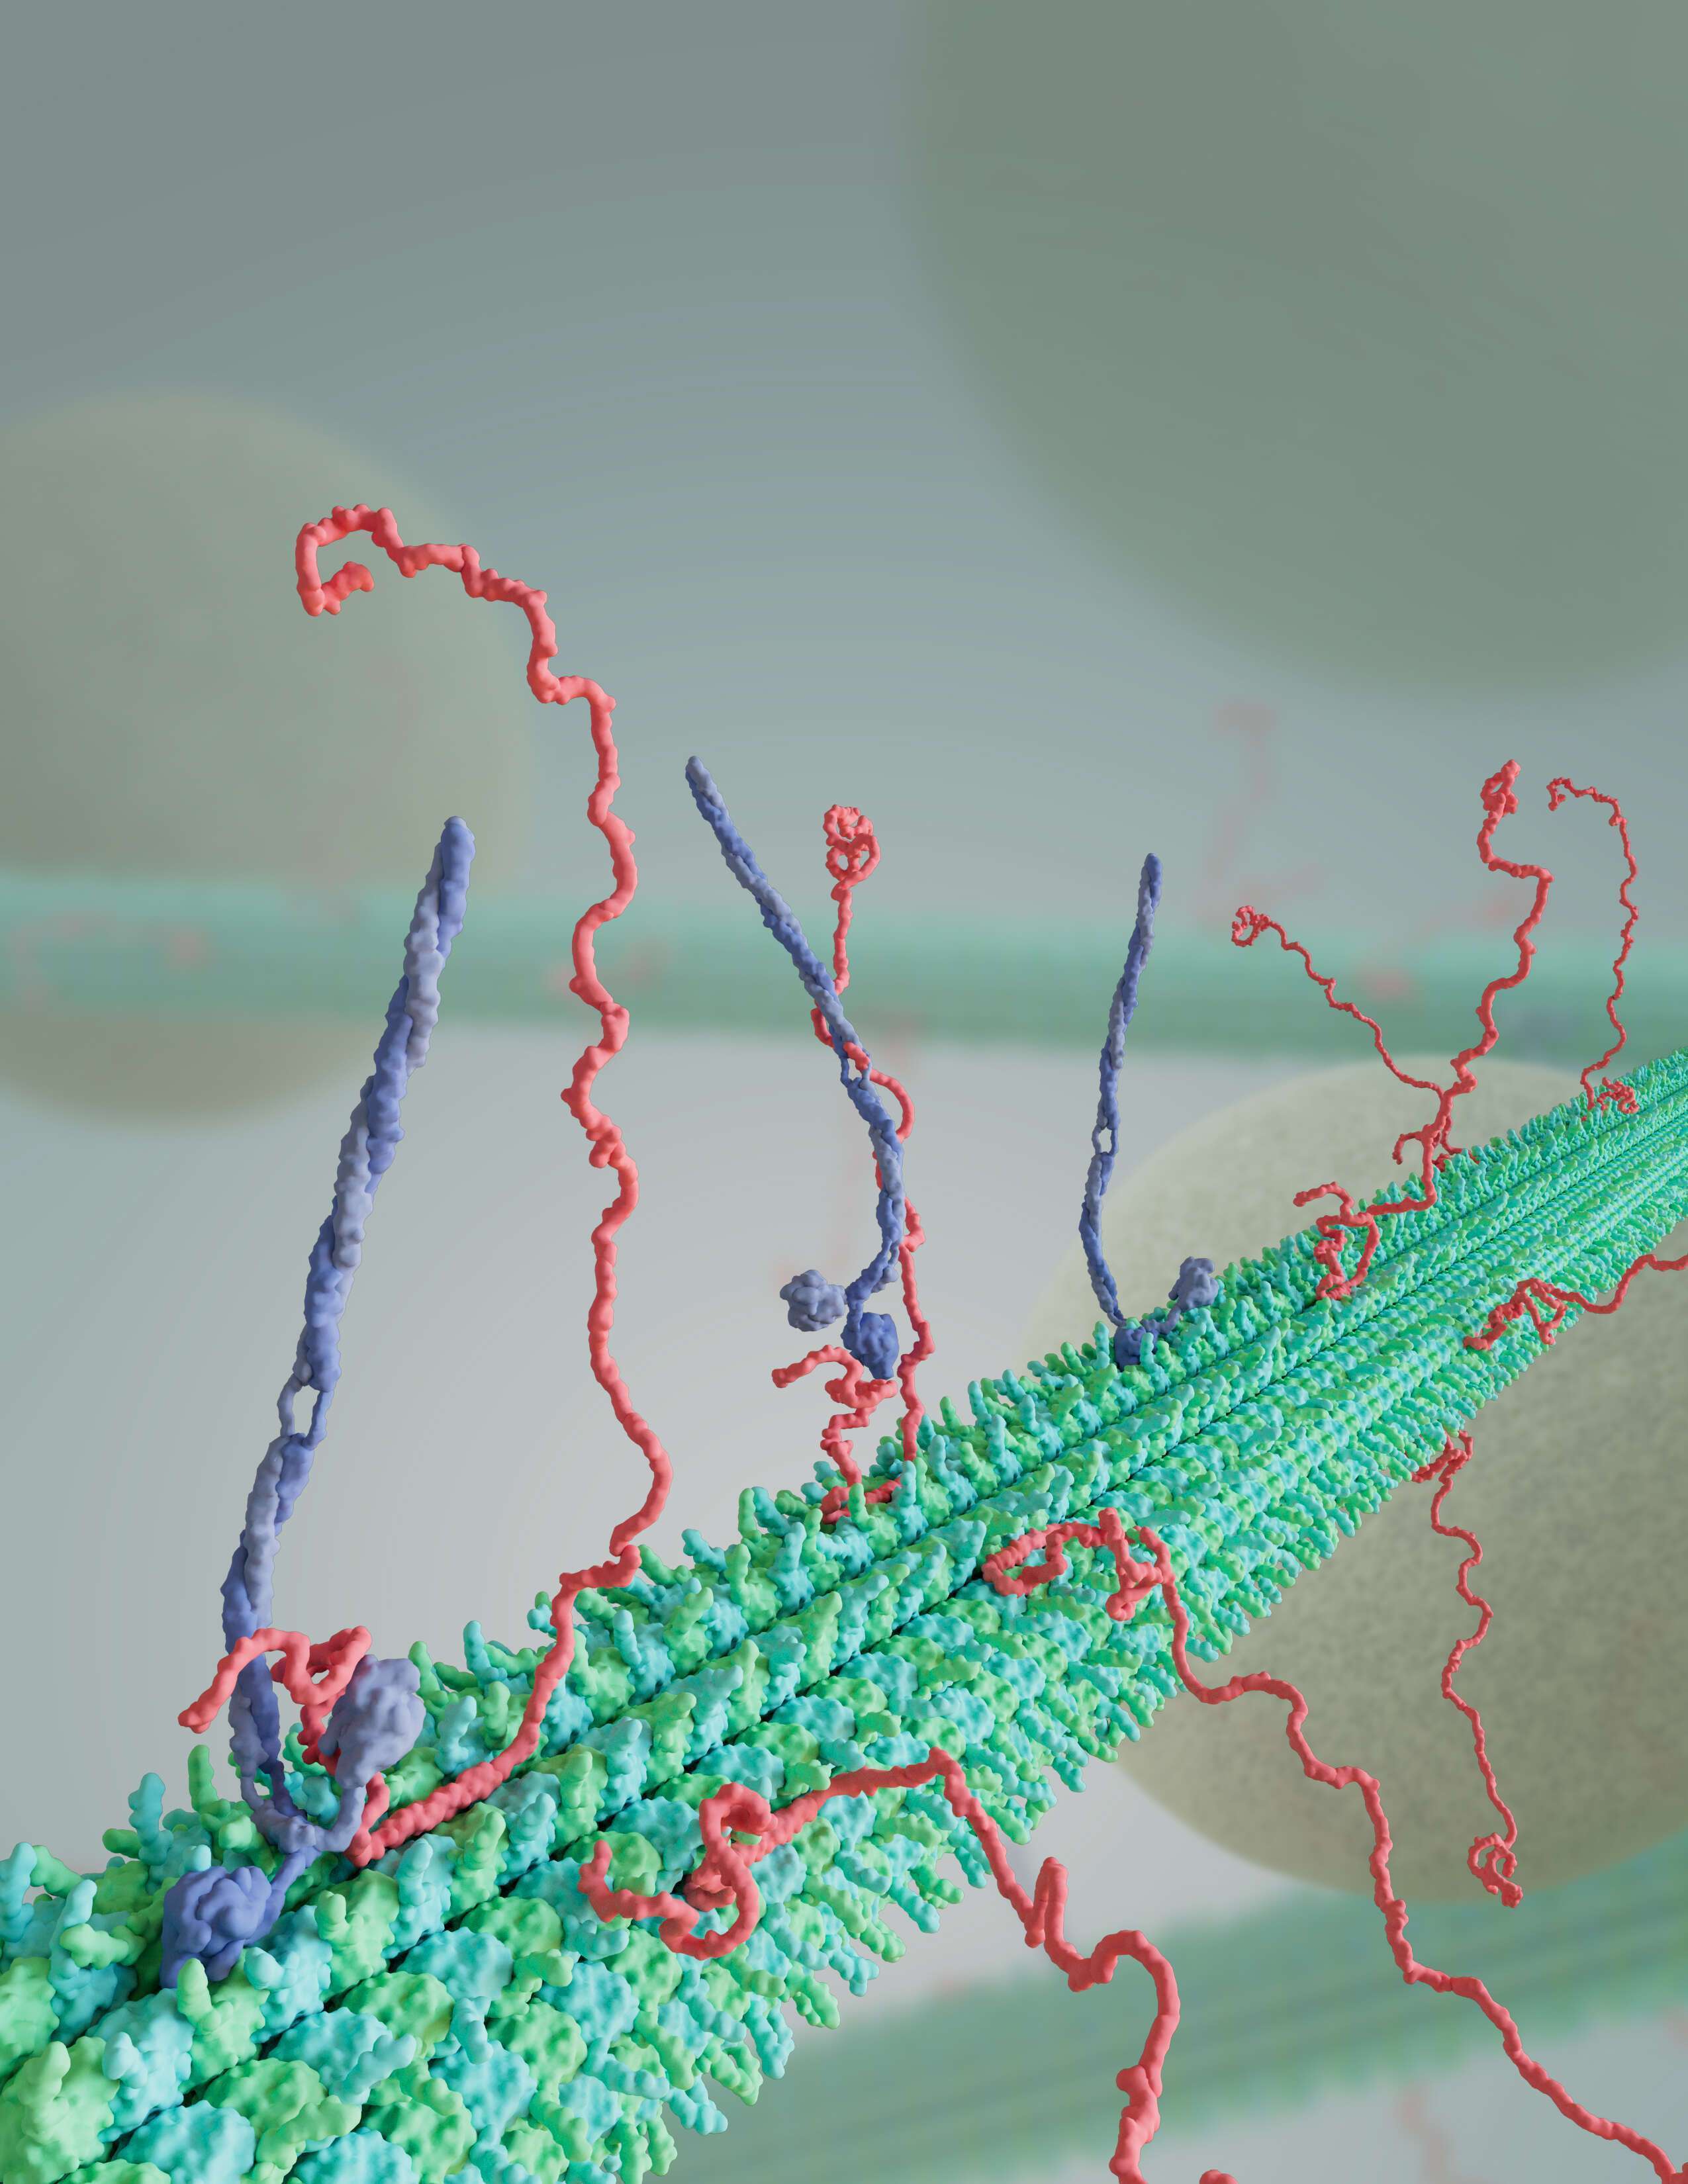 kinesin motors walking along MAP7-decorated microtubules